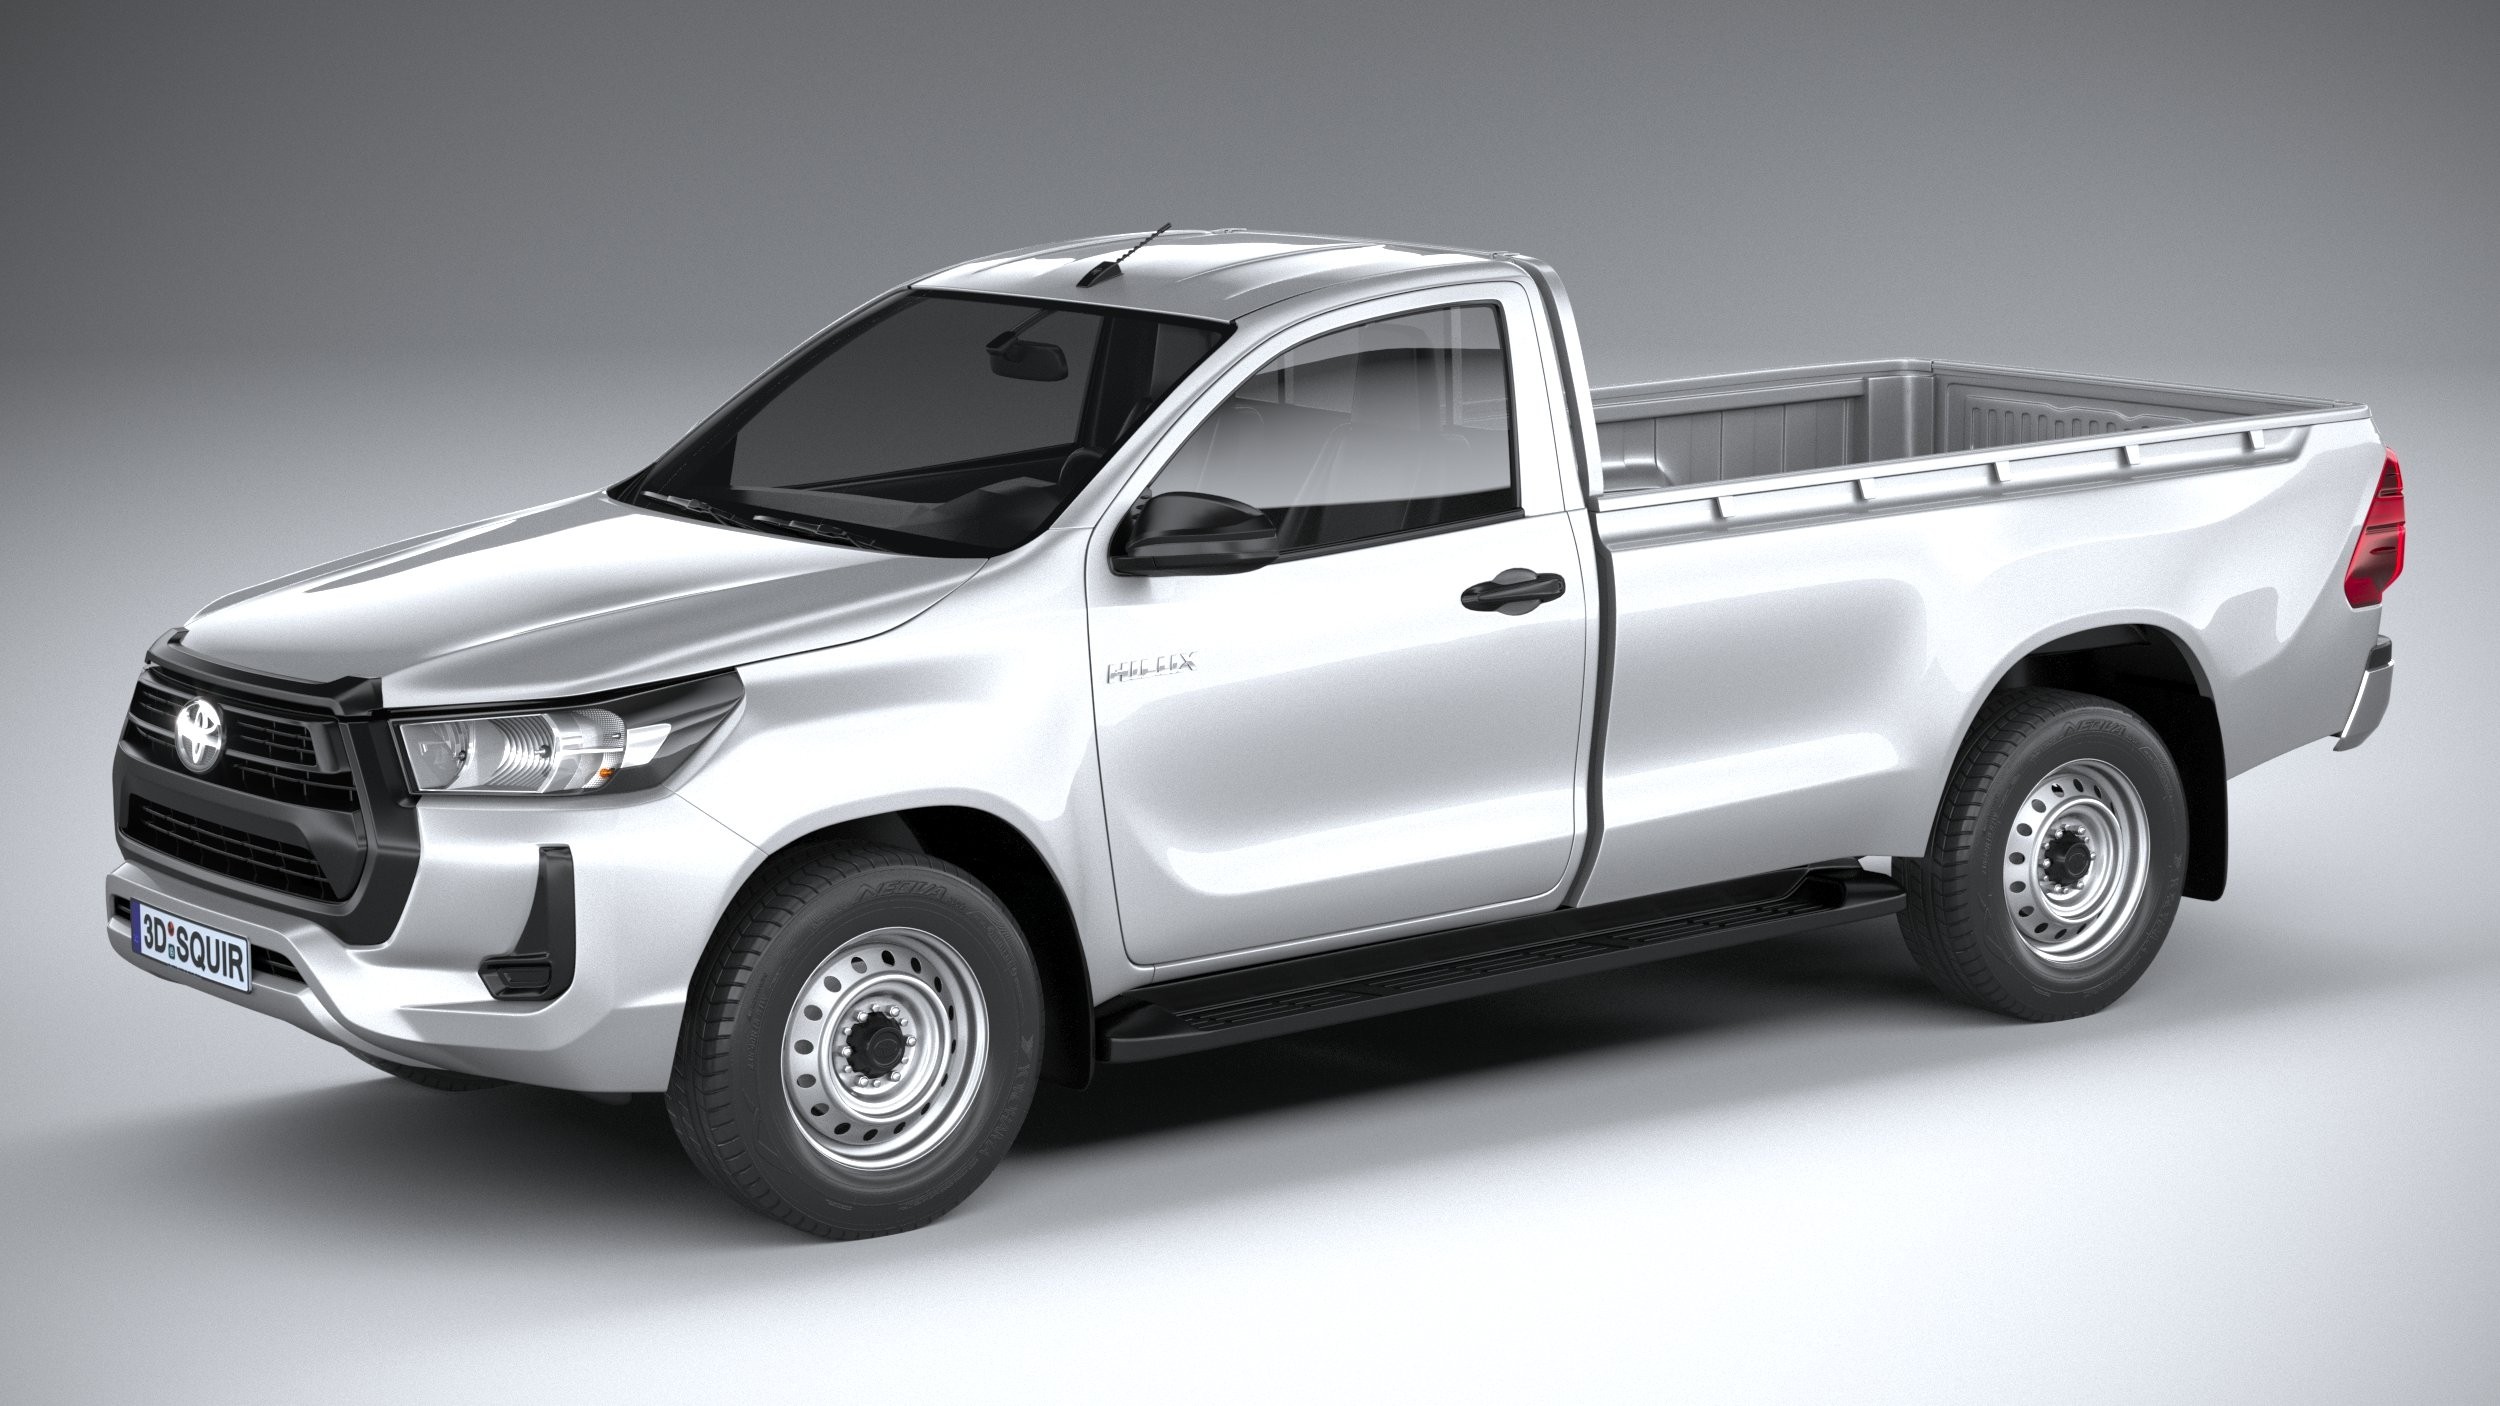 Toyota world-market Hilux pickup